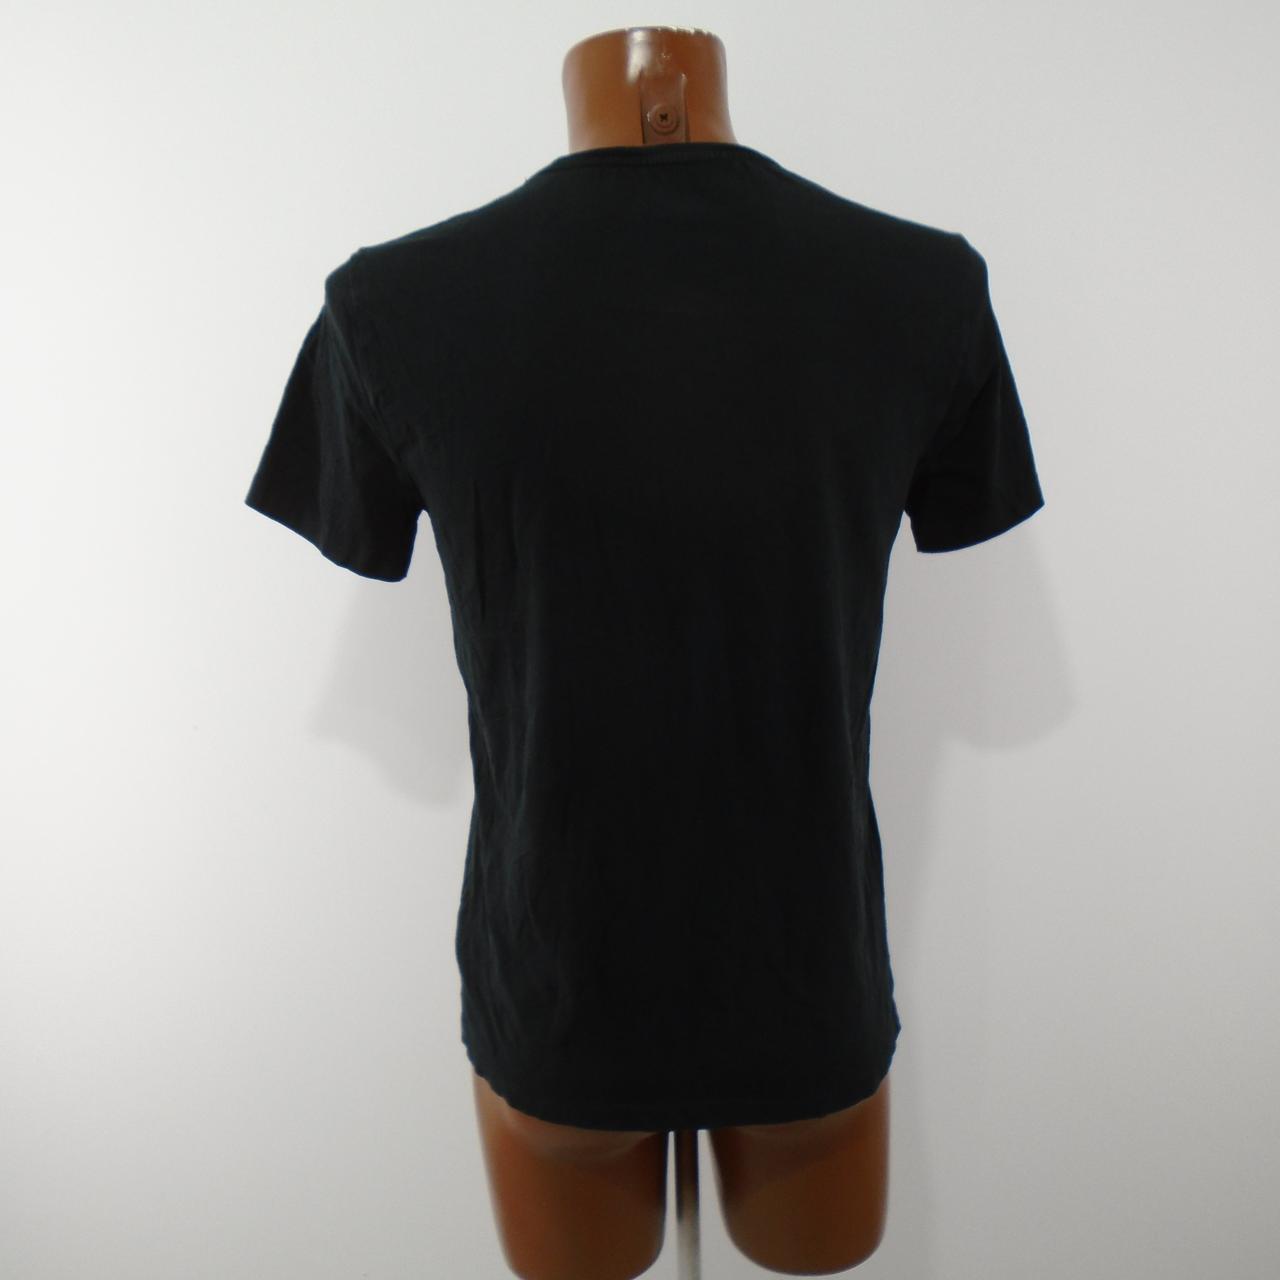 Men's T-Shirt Ralph Lauren. Black. M. Used. Good